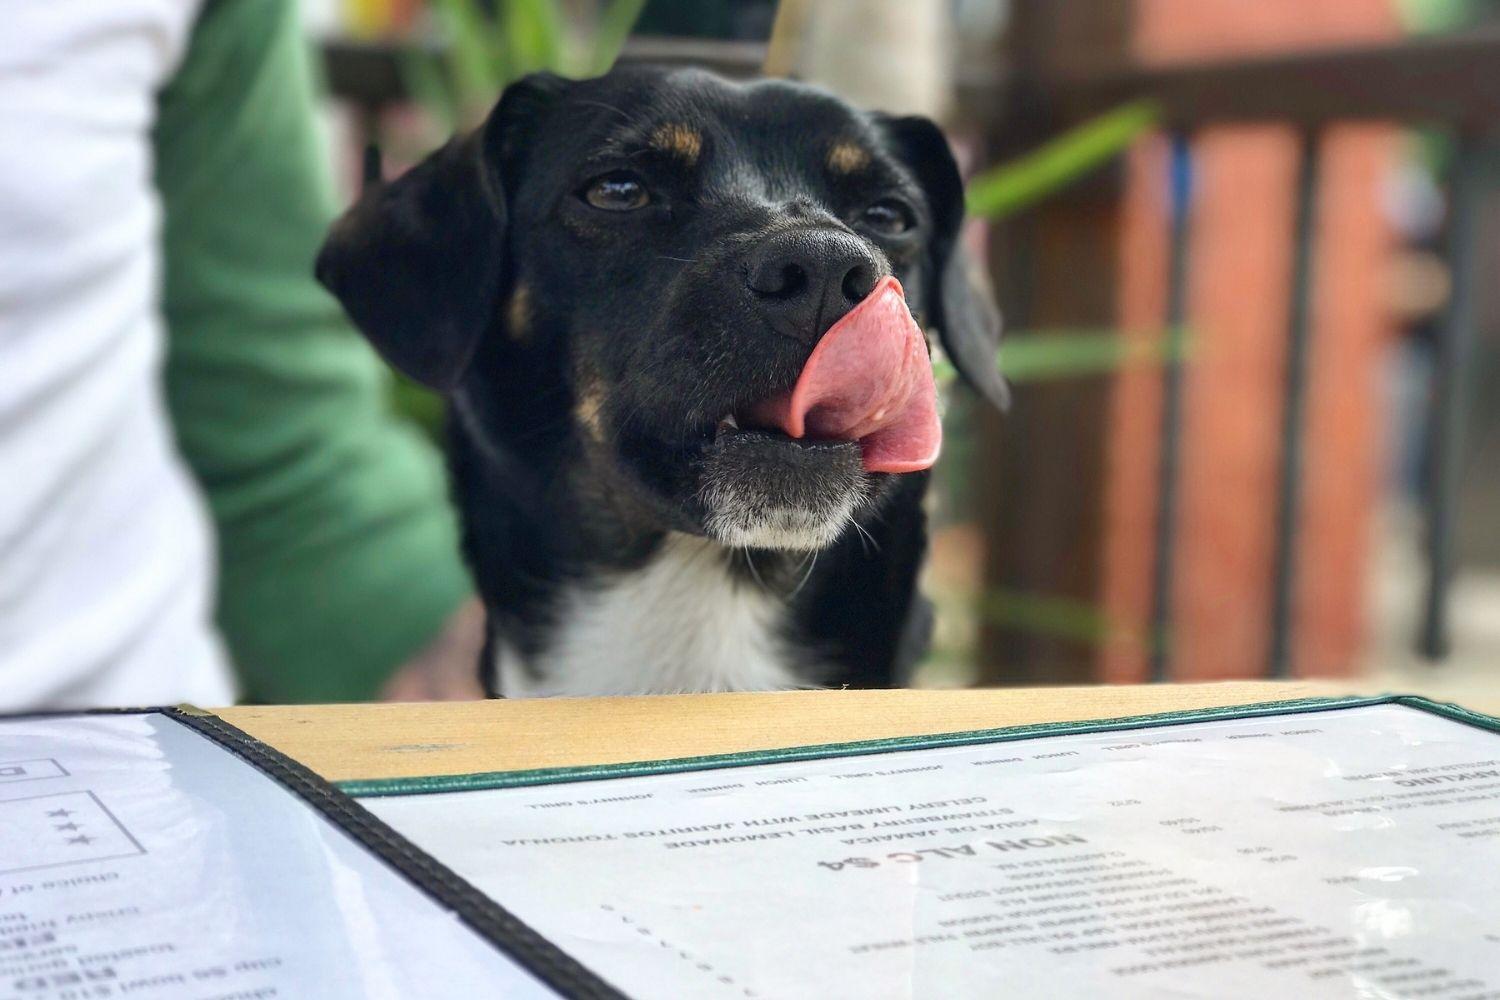 Dog licking lips at restaurant